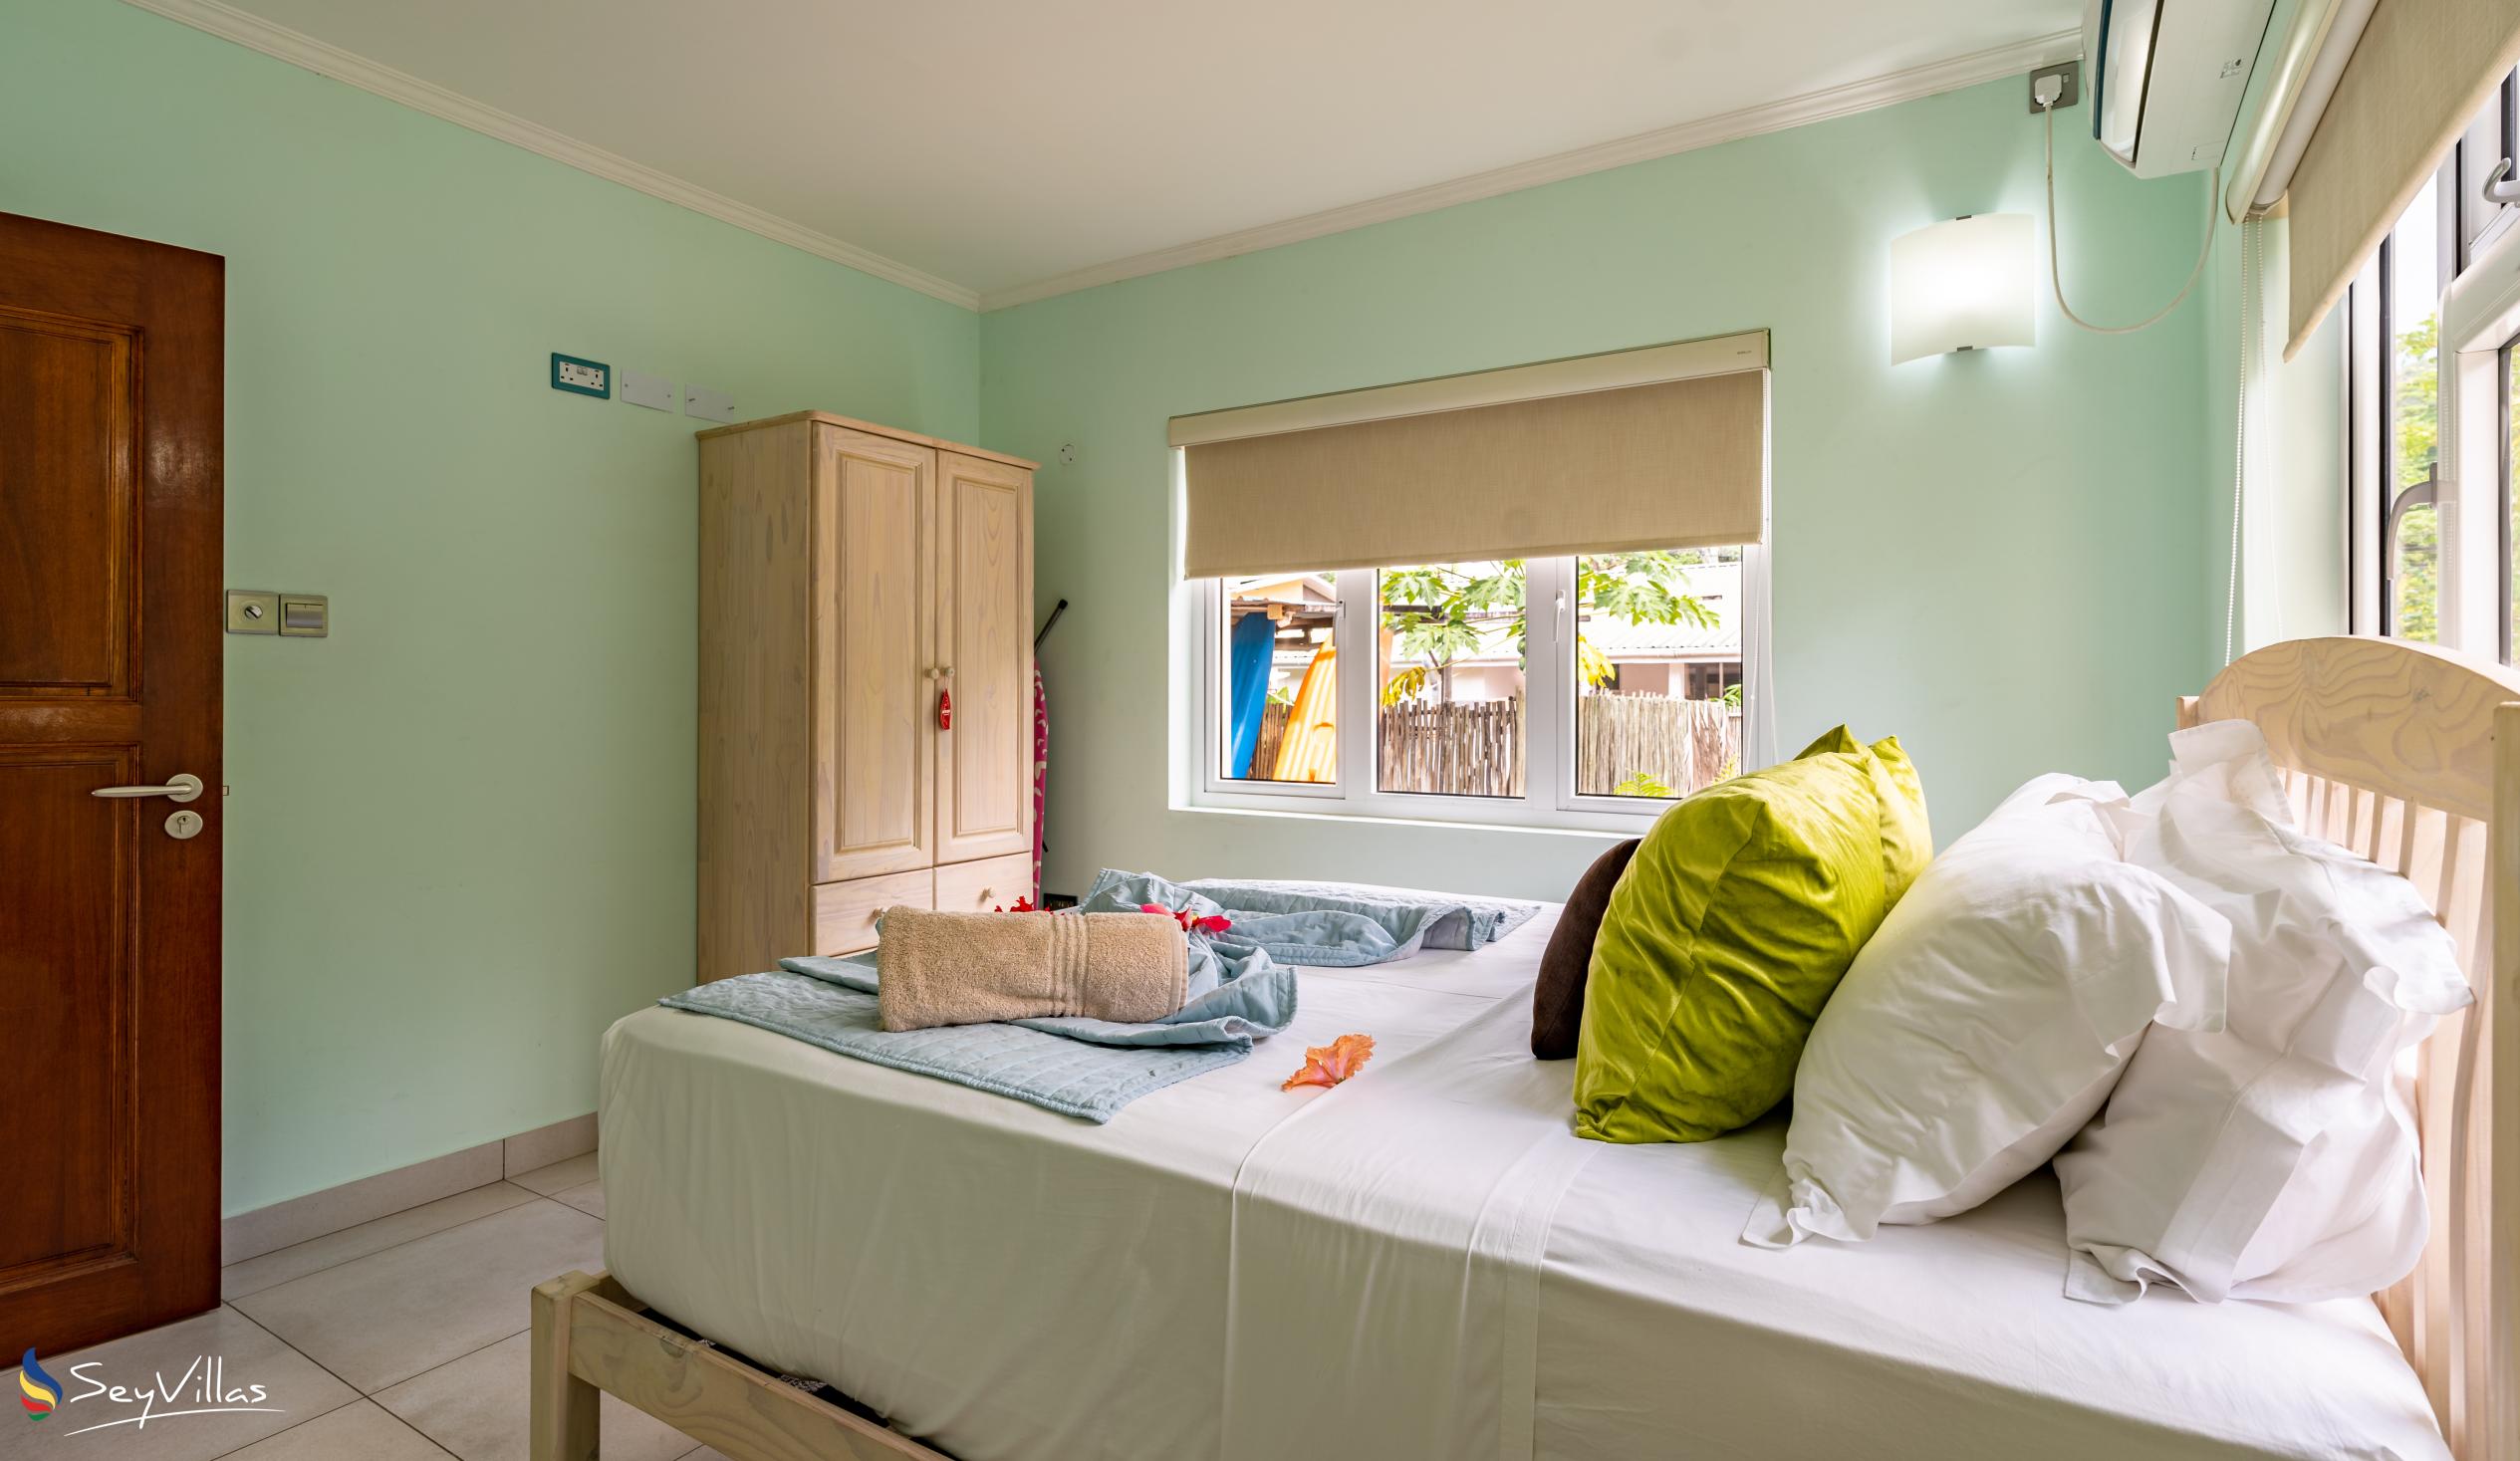 Photo 77: Mae Waterfront Apartments - 2-Bedroom Apartment - Mahé (Seychelles)